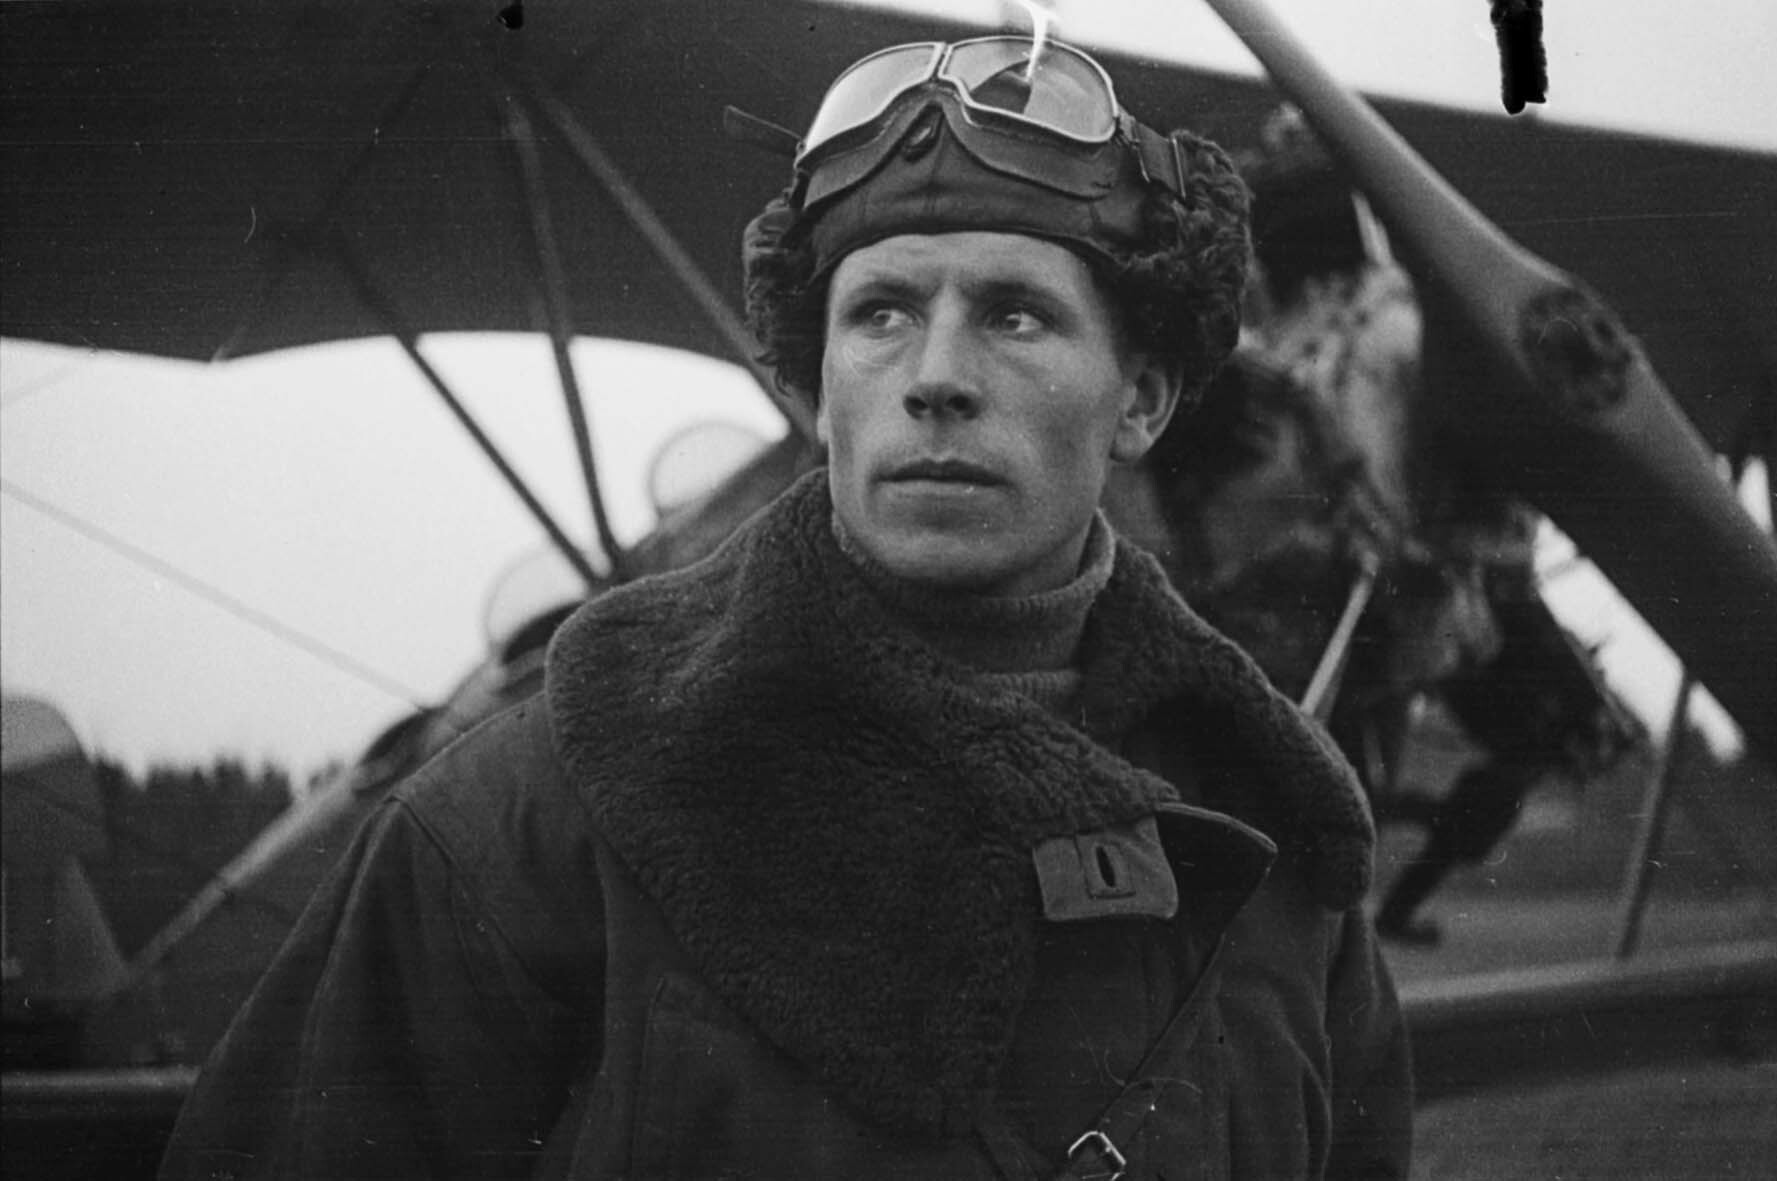 Fotografie: Pilot der 357. selbständigen Verbindungsstaffel, Kalininer Front, 22. Oktober 1942 (Museum Berlin-Karlshorst RR-P)